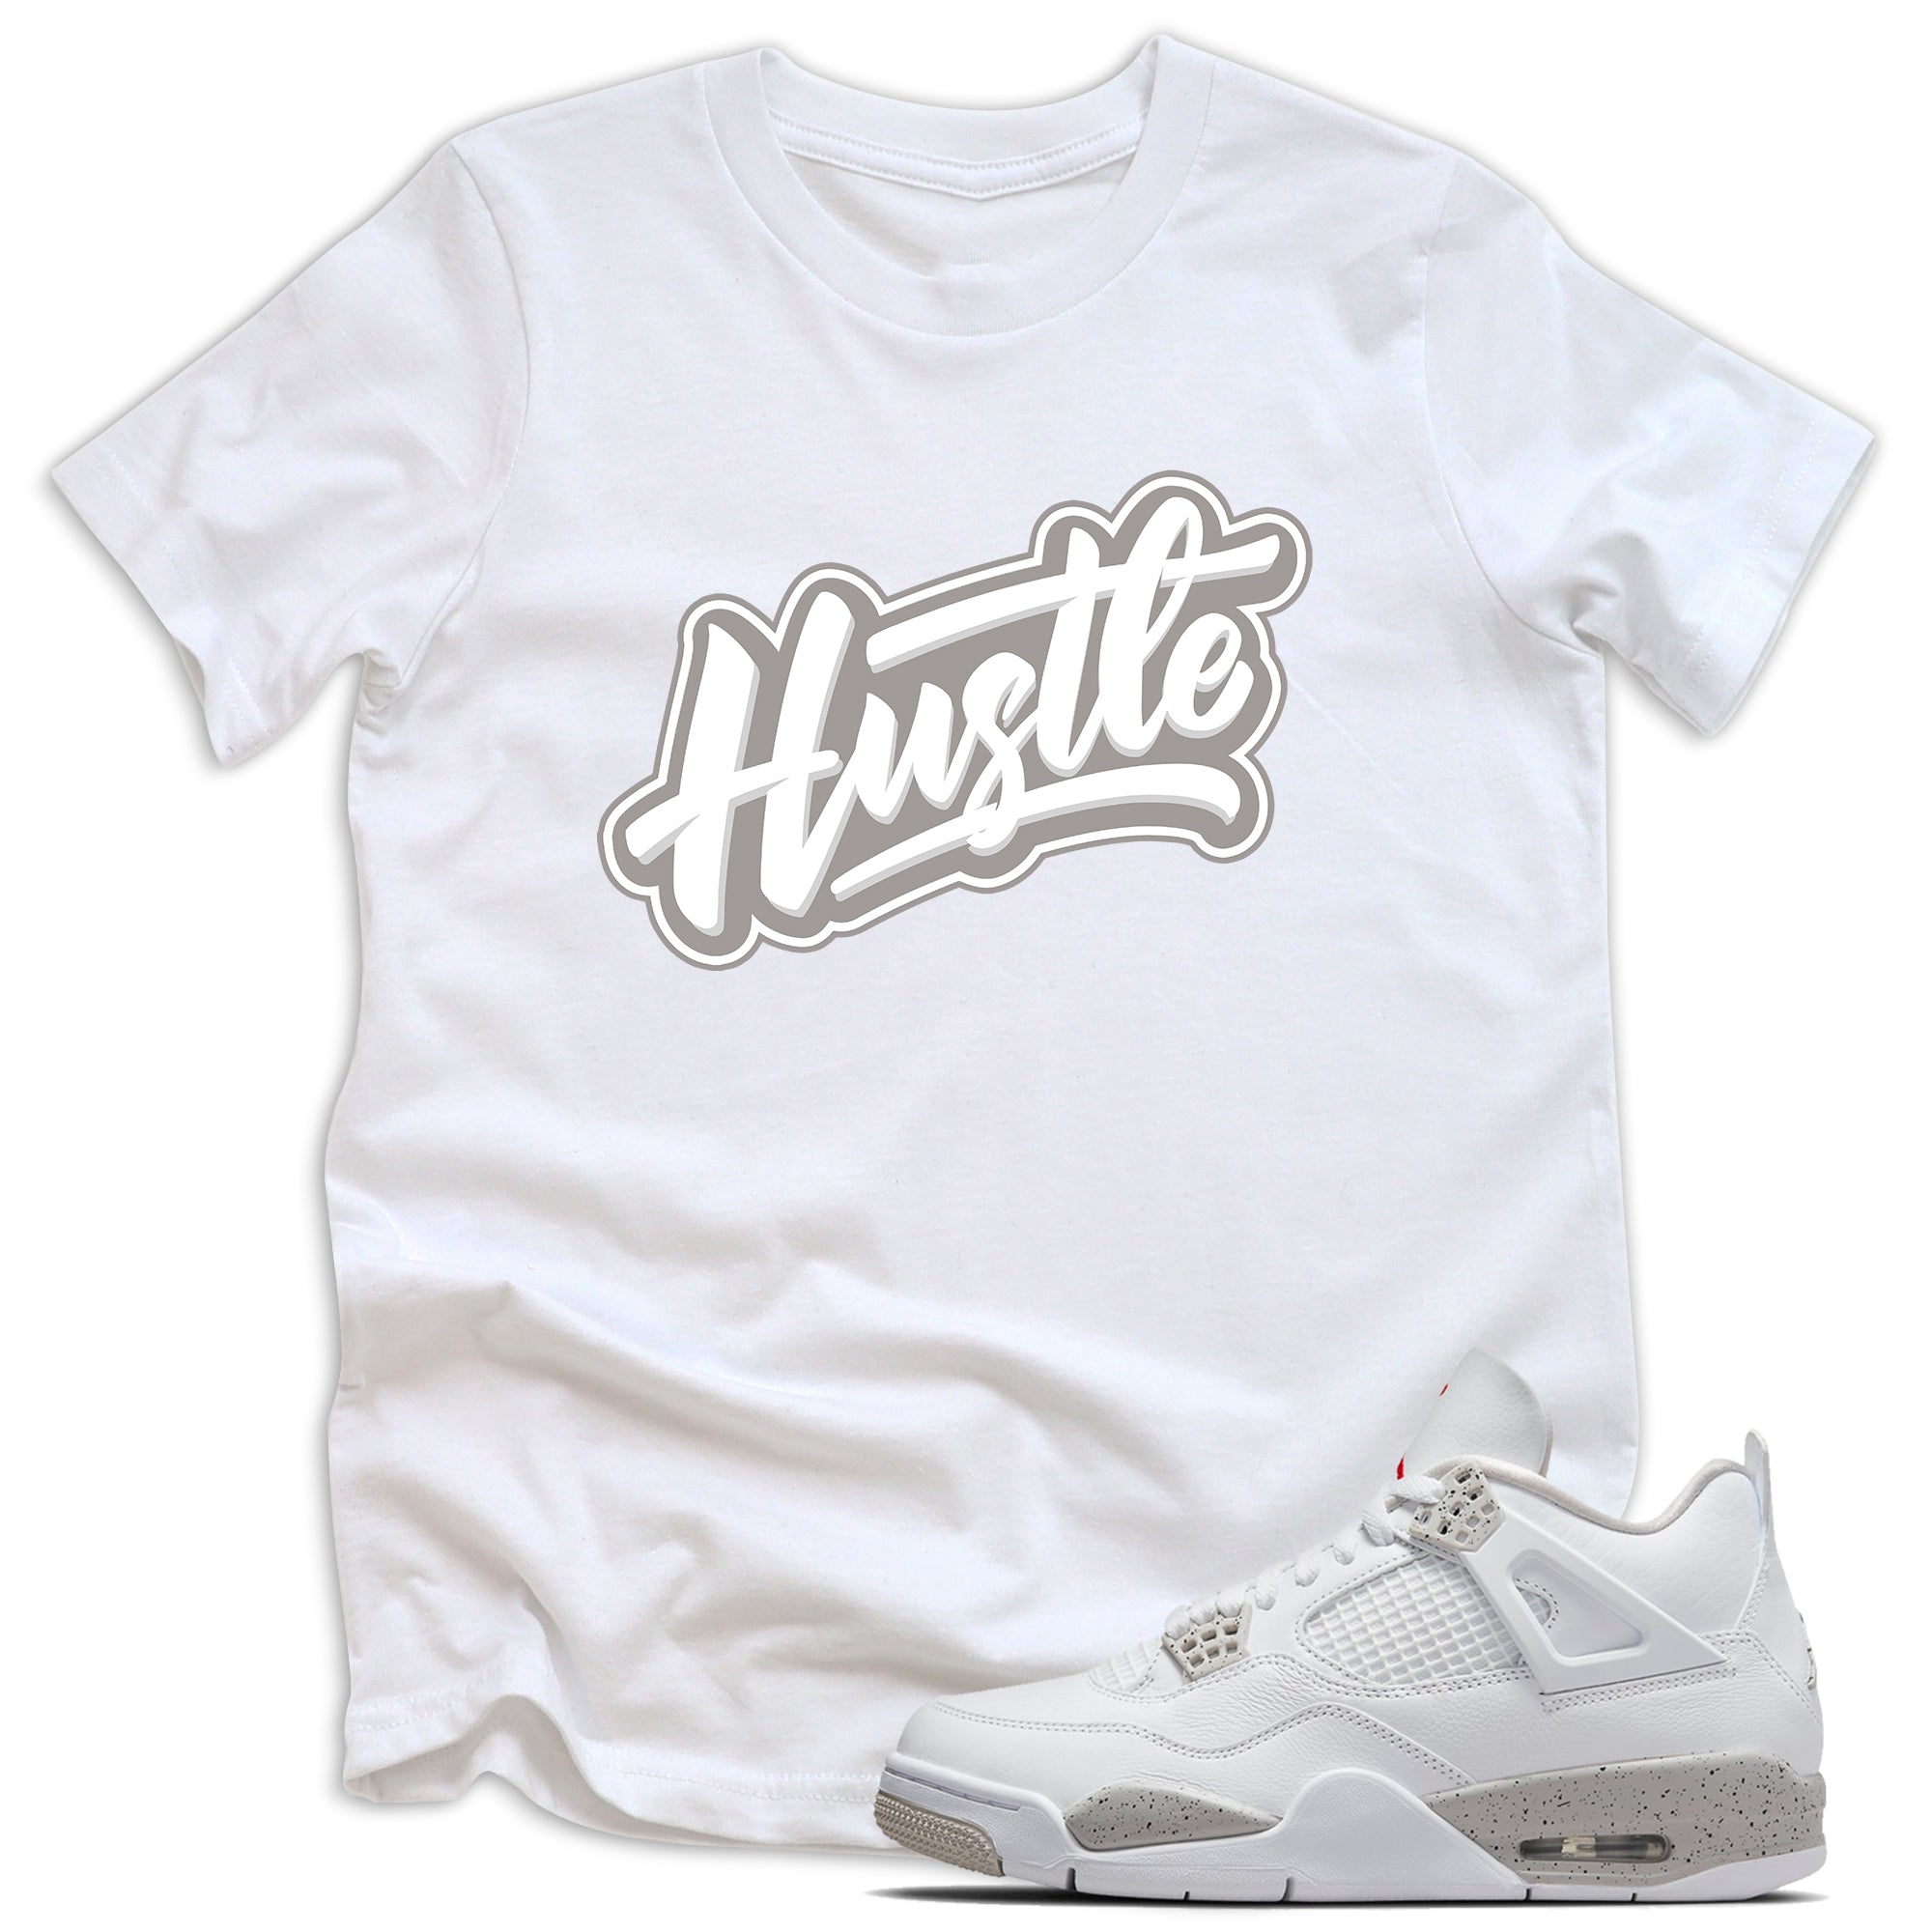 kids Hustle Shirt AJ 4 Retro White Oreo photo